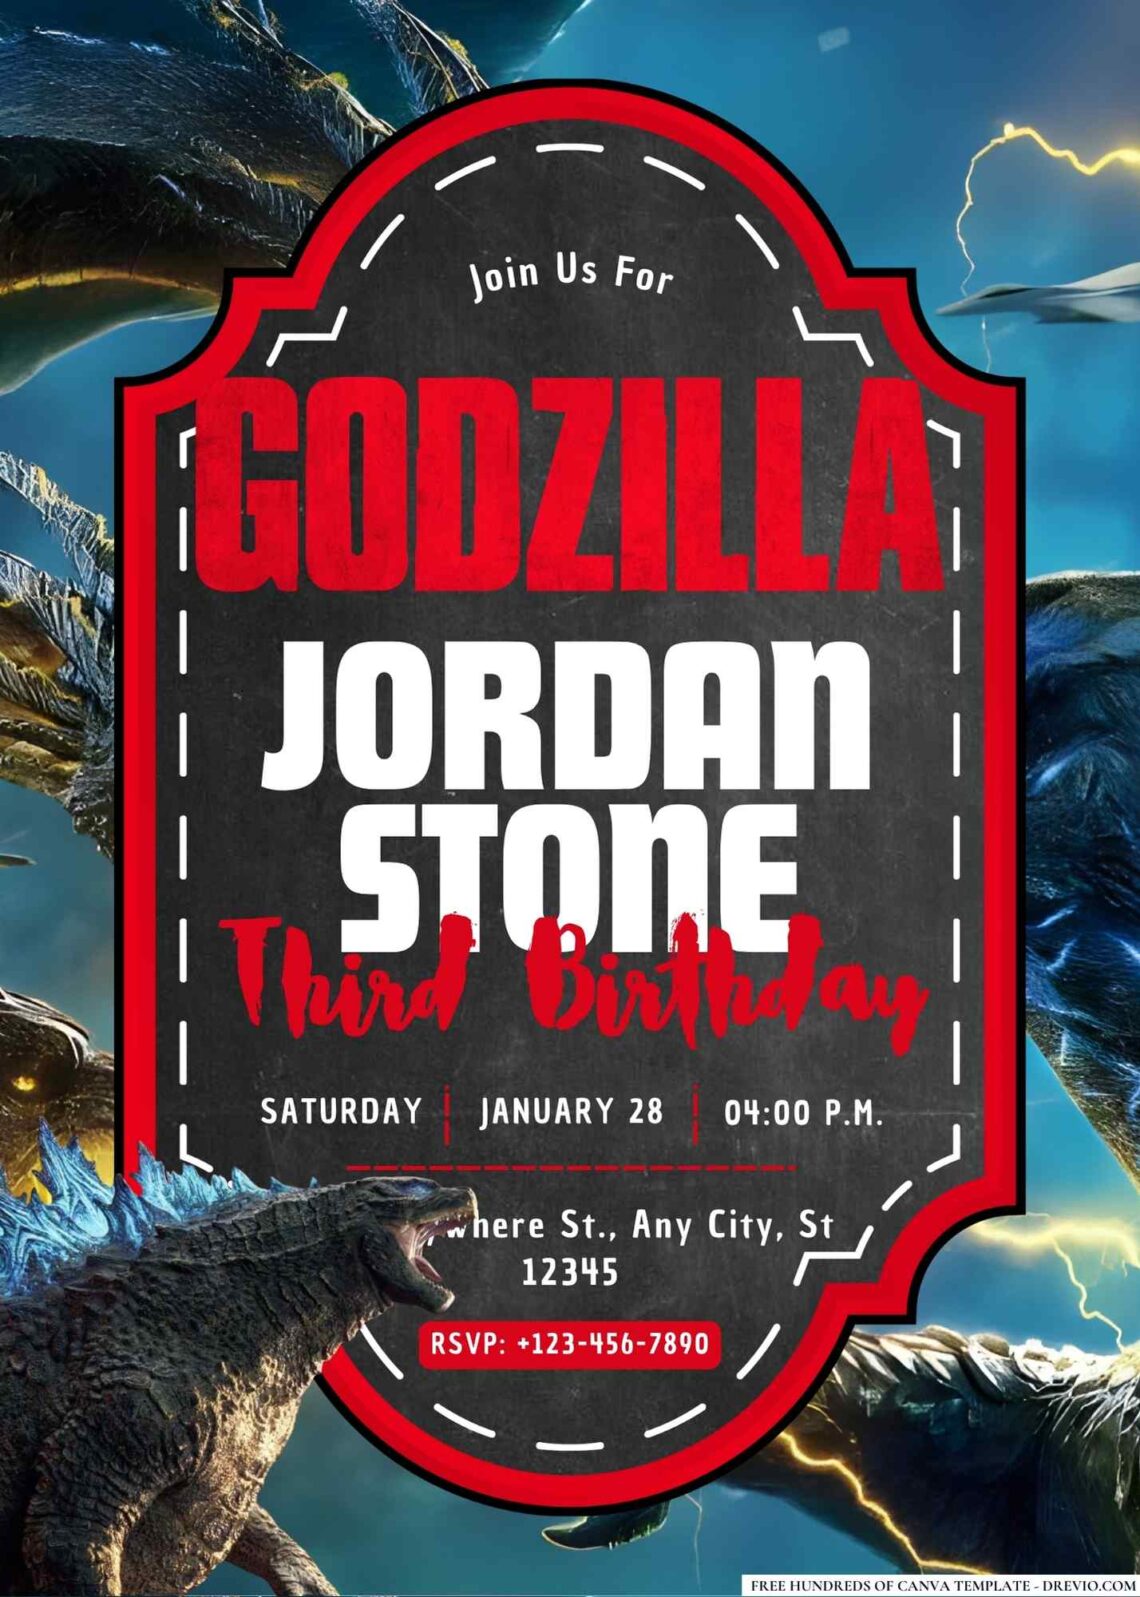 FREE Godzilla Birthday Invitations: